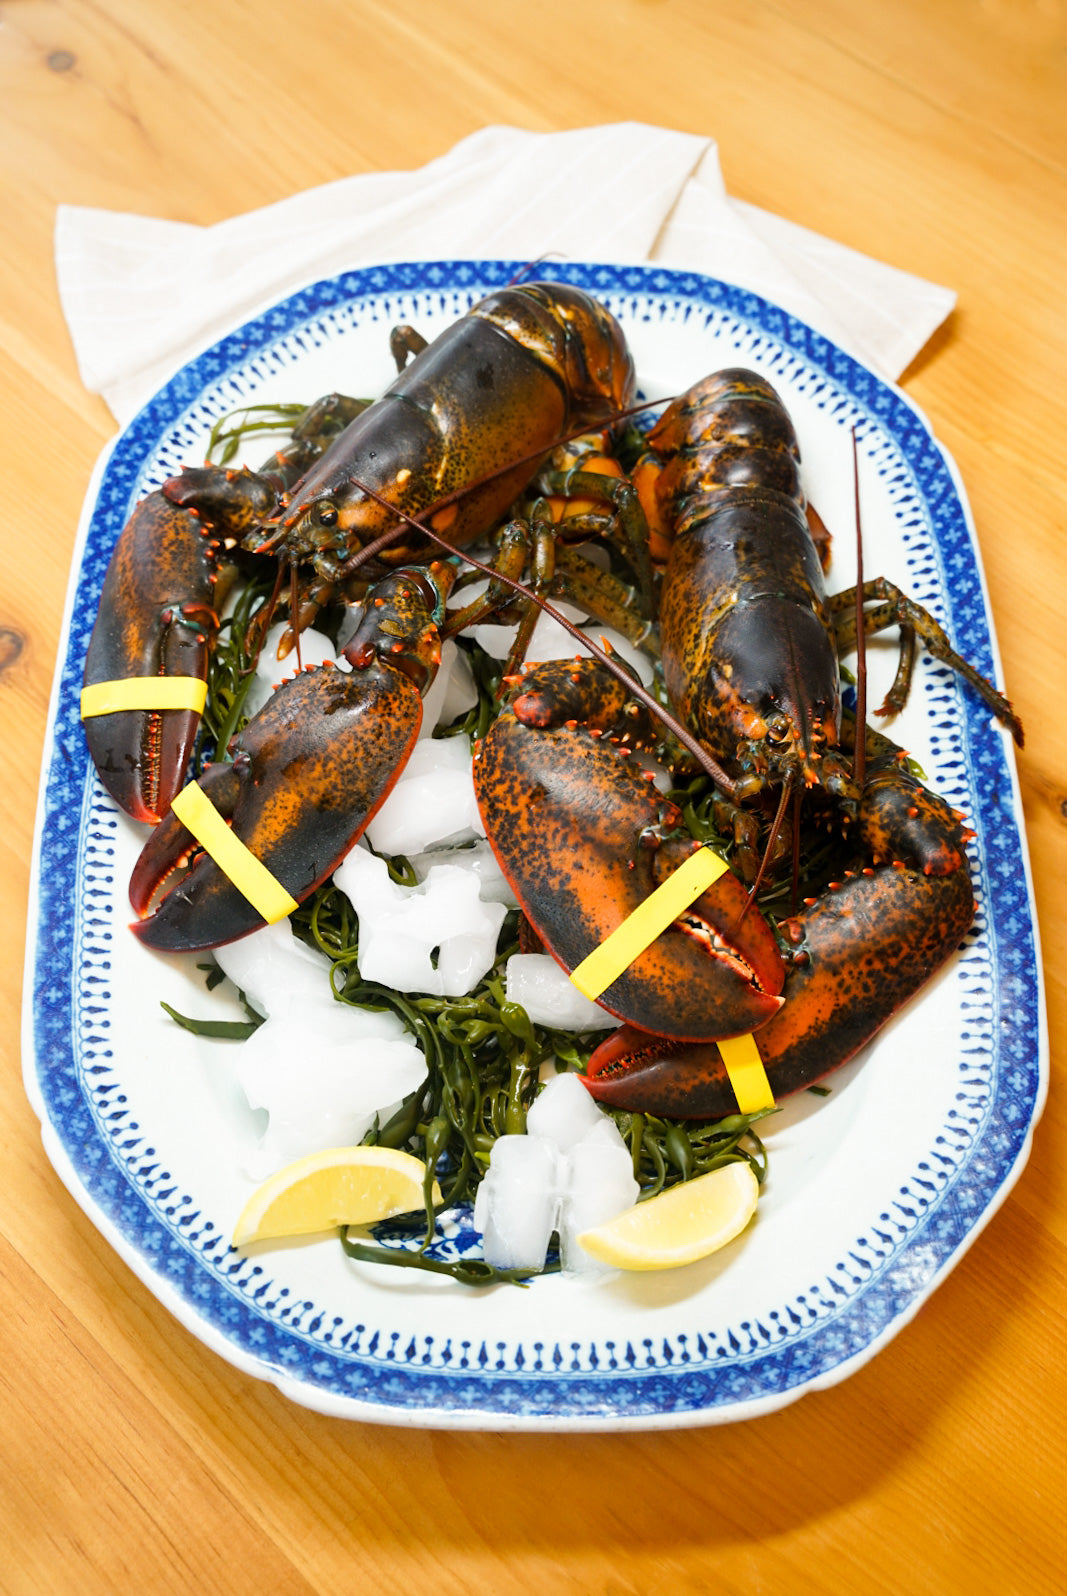 Live Maine Lobster 1 - 1.25 lb